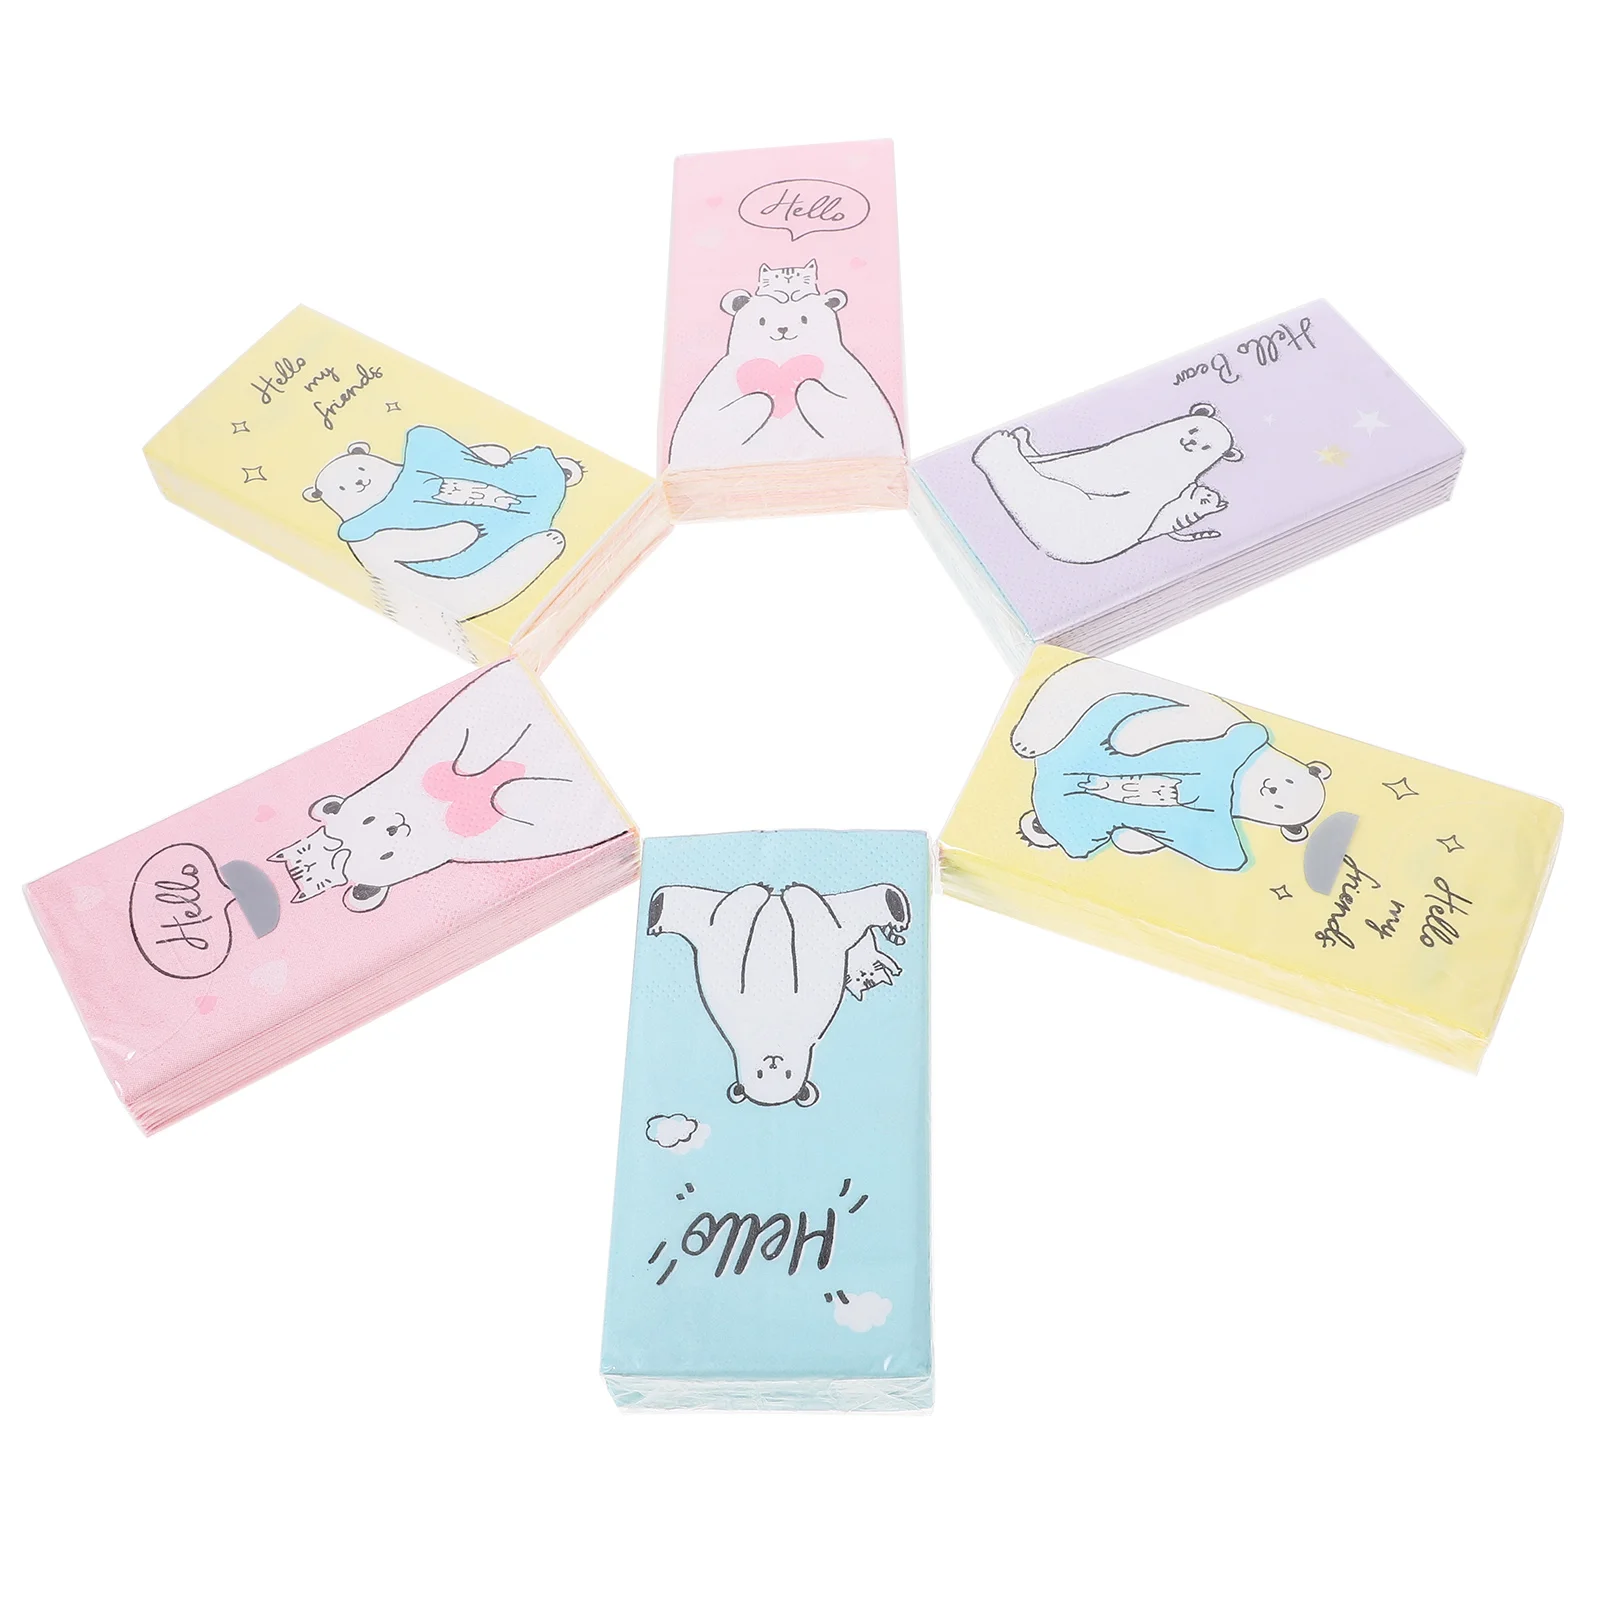 

Decorative Napkin Cartoon Napkins Paper Adorable Portable Printed Tissue Small Bag